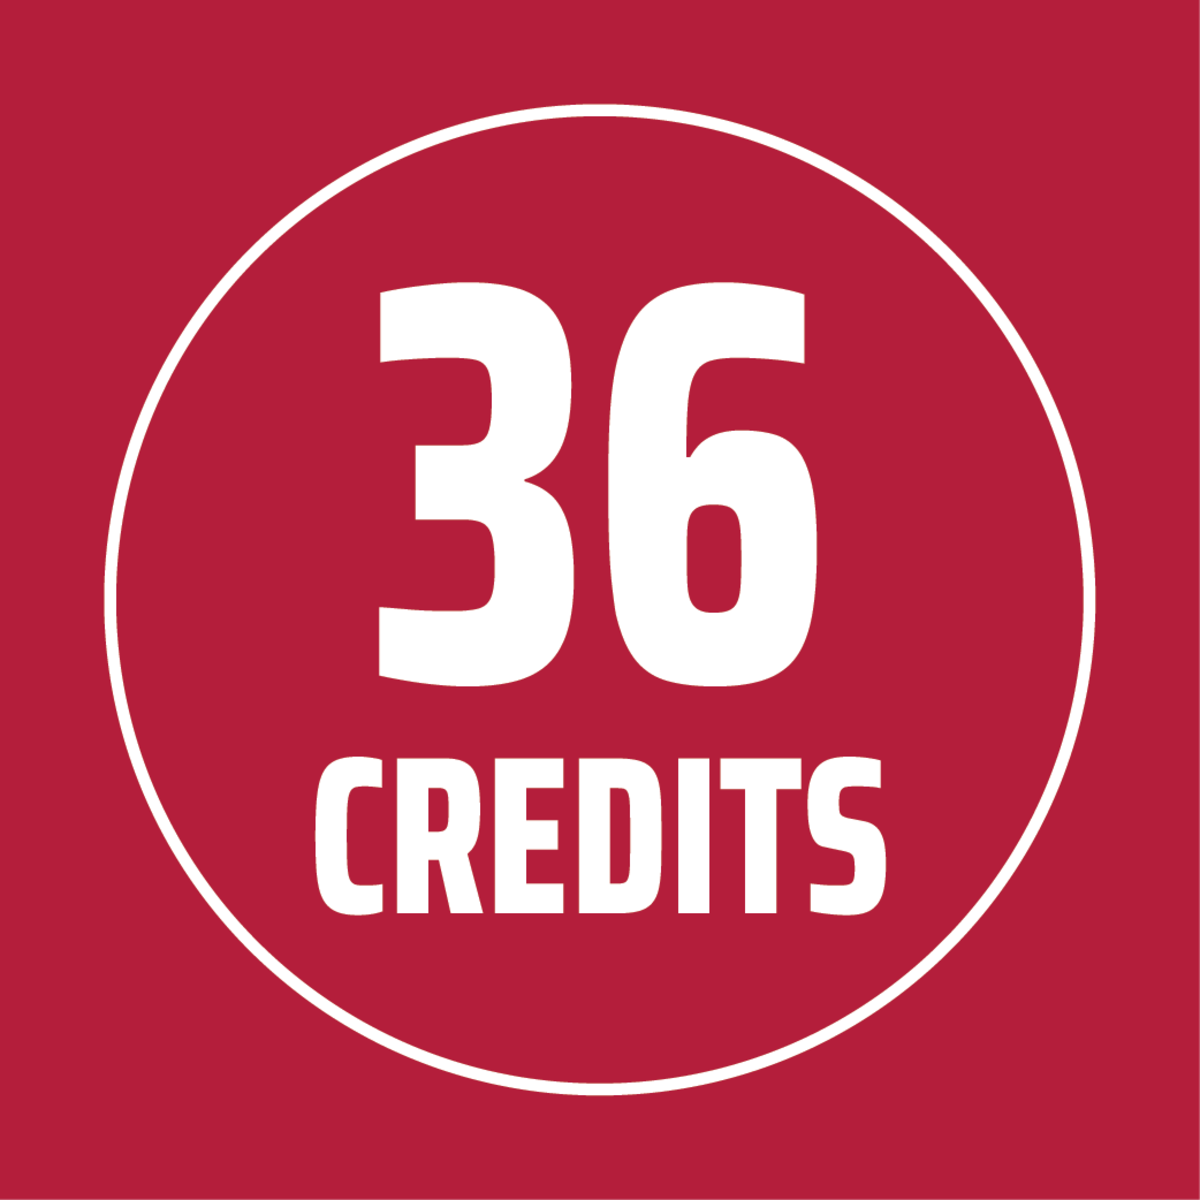 36 credit program